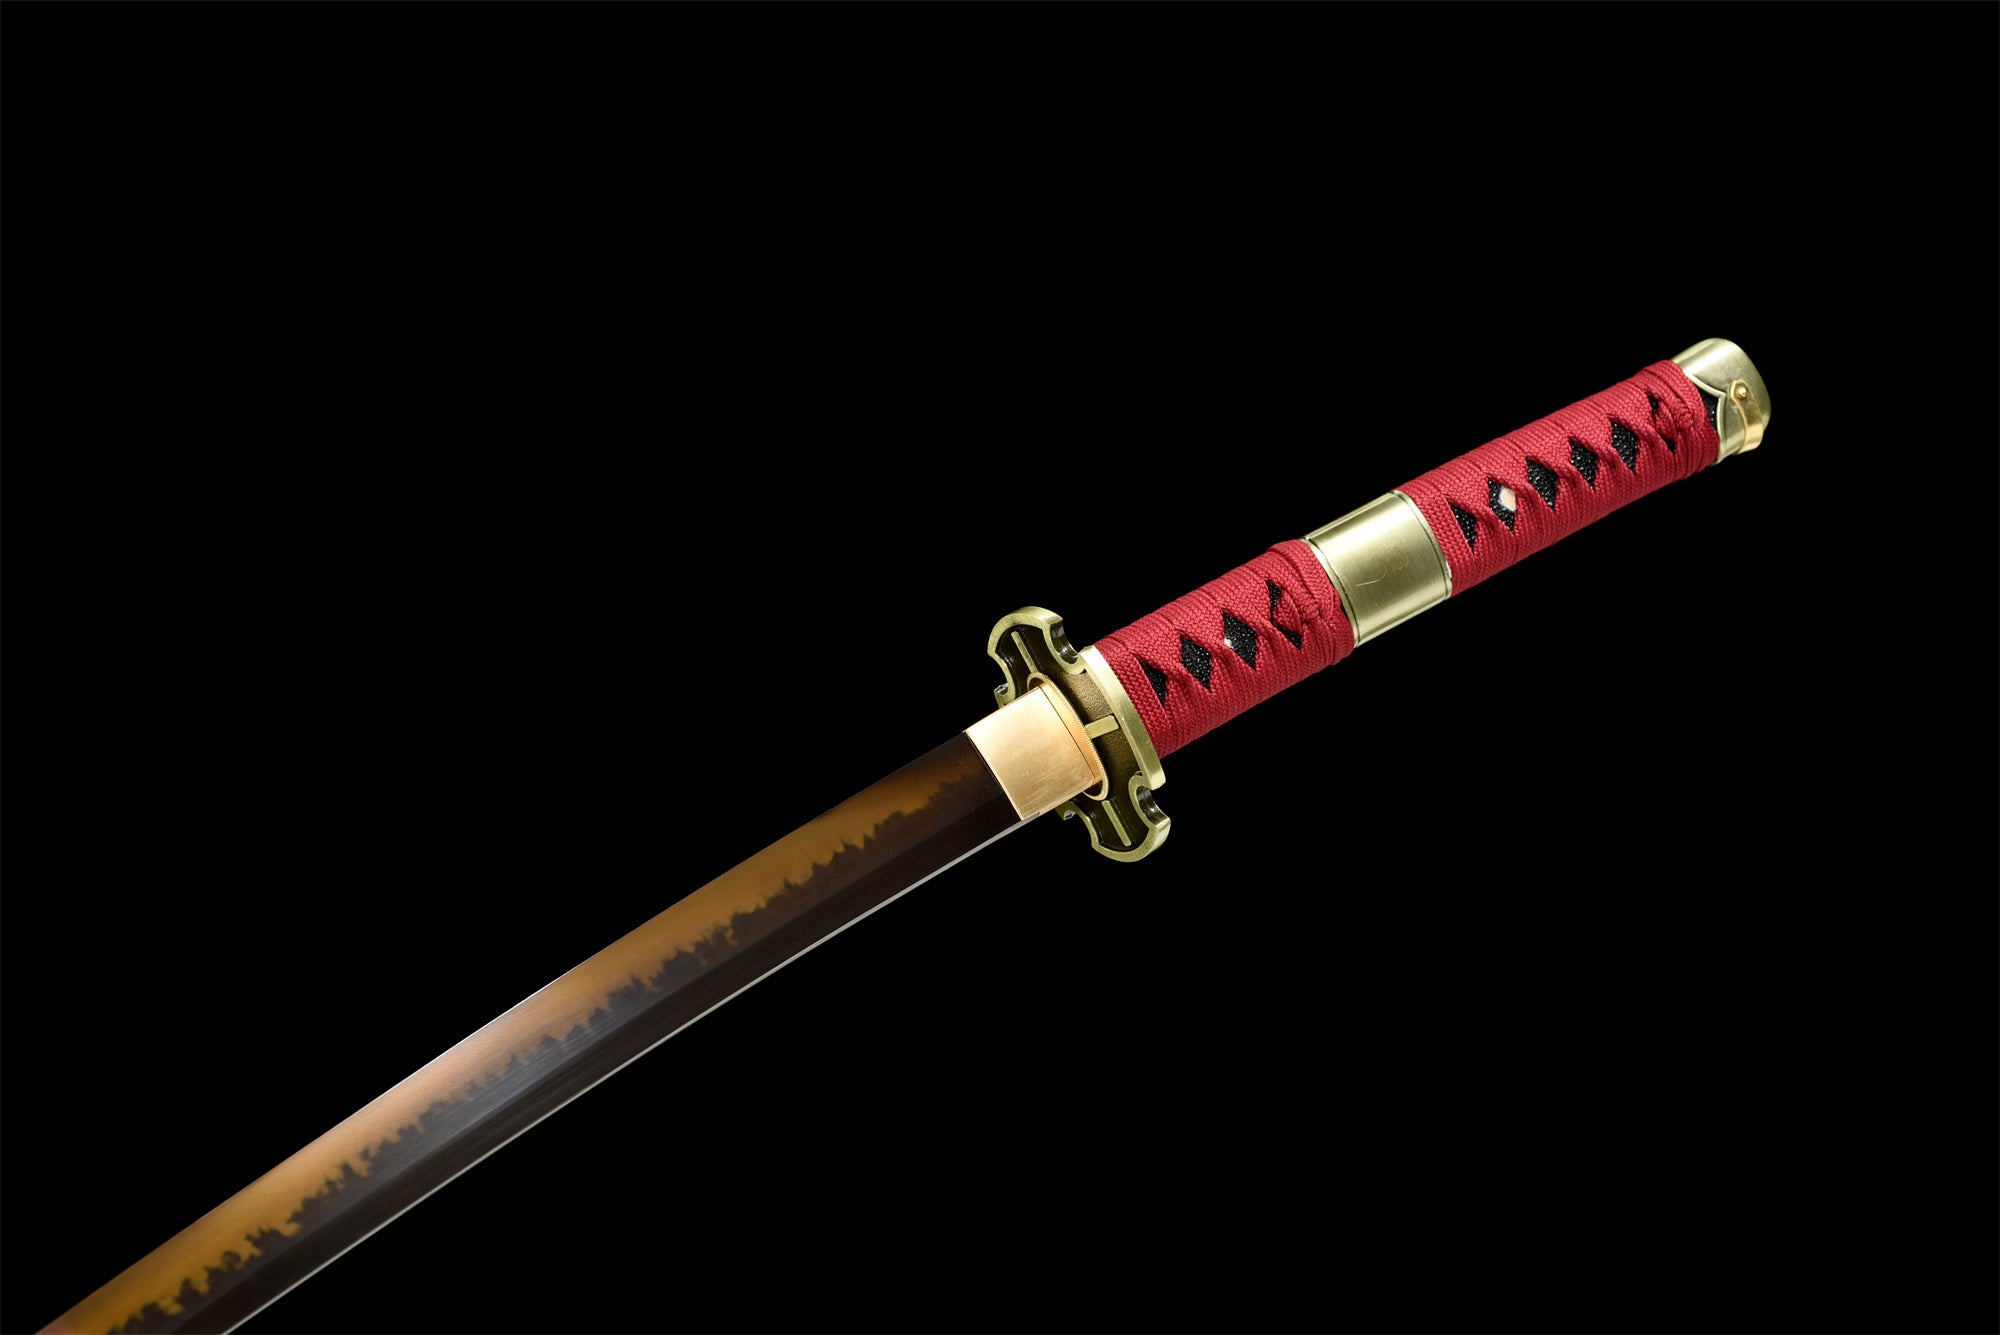 Anime Sword,One Piece Roronoa Zoro,Real Japanese Samurai Sword,Handmade anime Katana,T10 High Carbon Steel Clay Tempered With Hamon